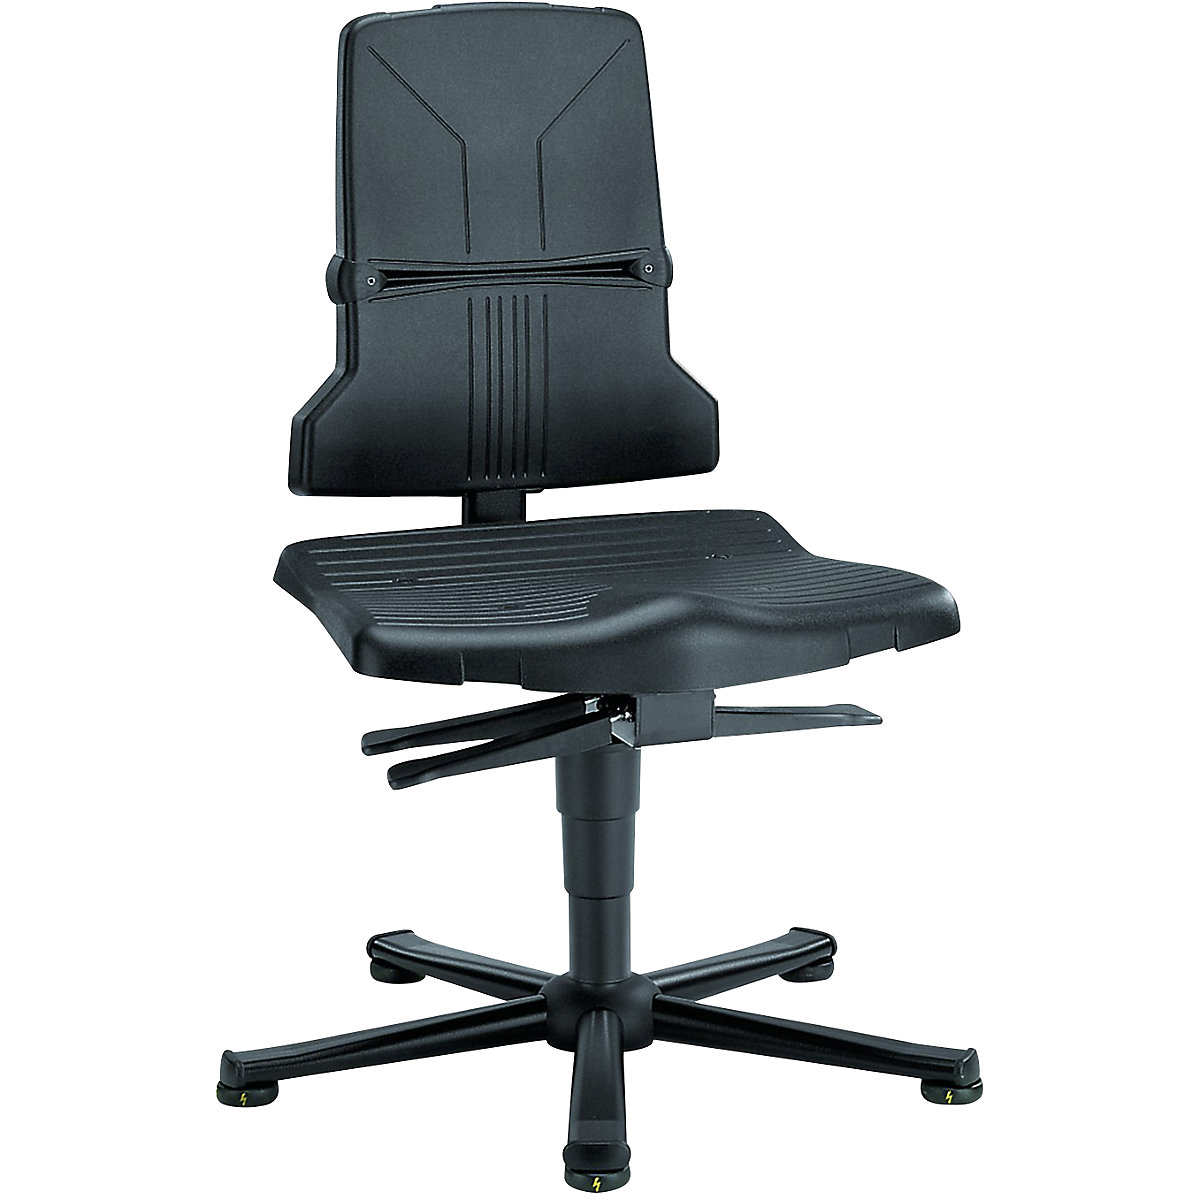 SINTEC industrial swivel chair - bimos